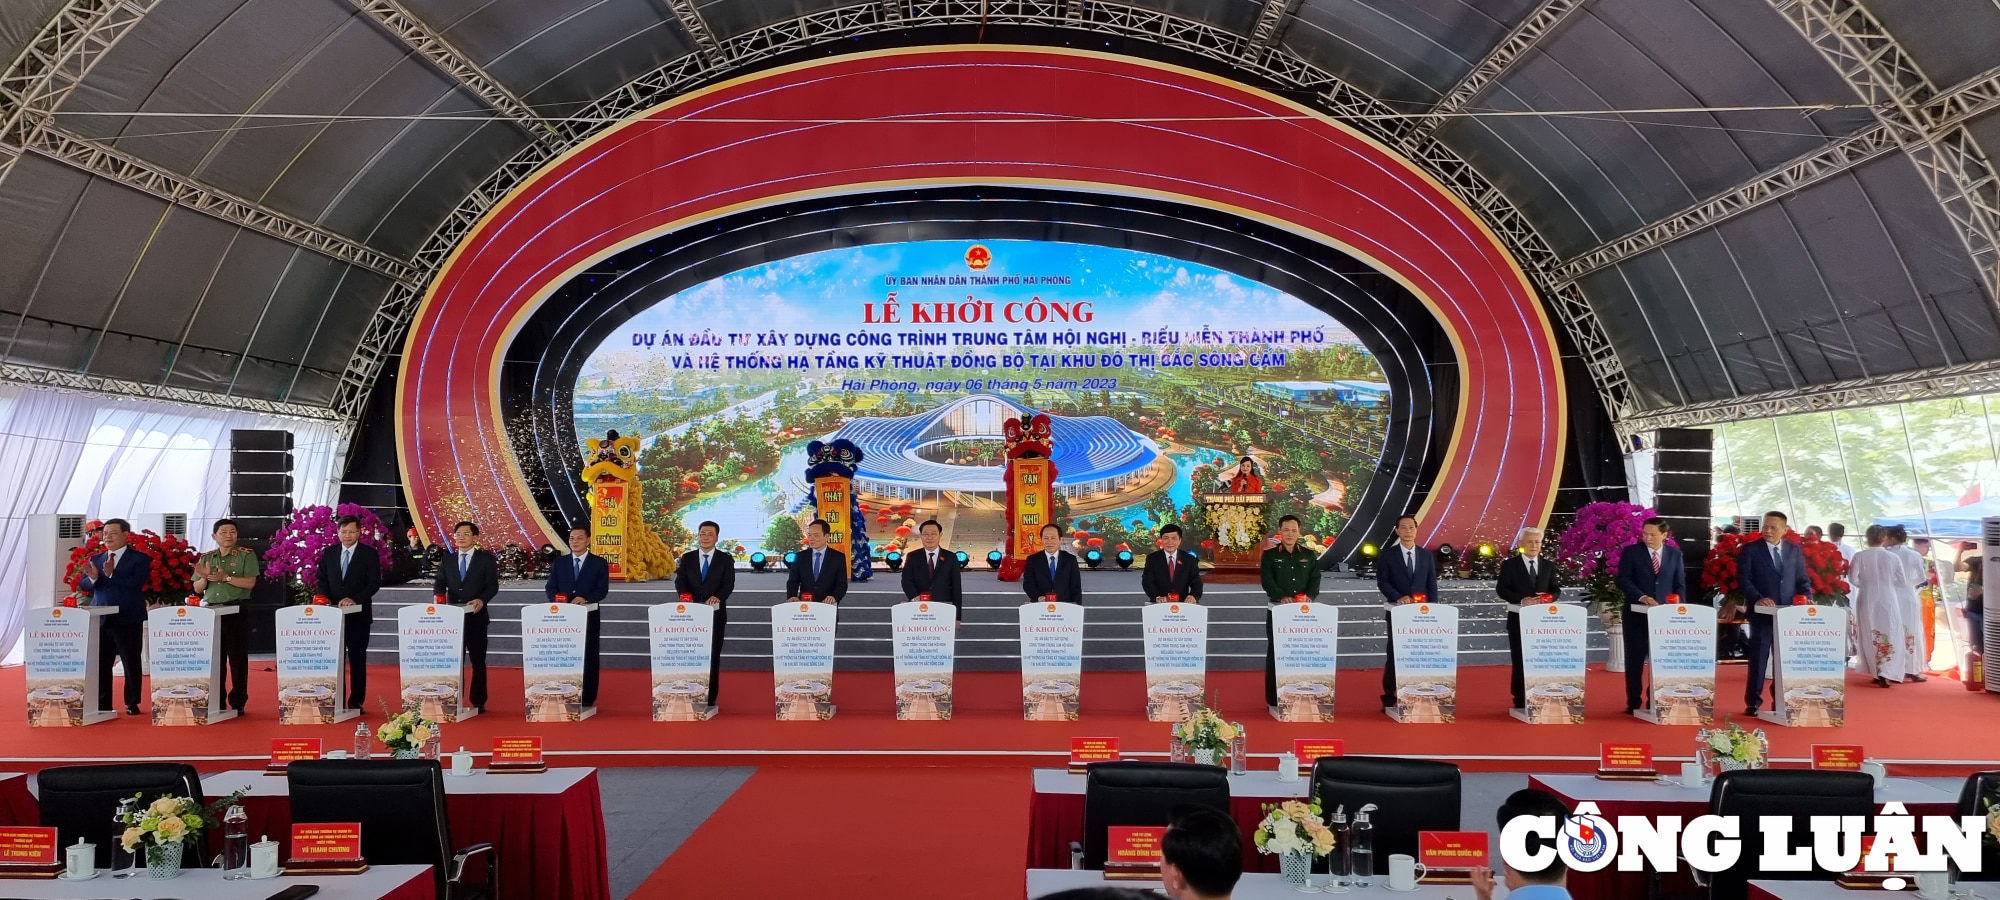 Hai Phong: Groundbreaking for Convention Center - Vietnam.vn